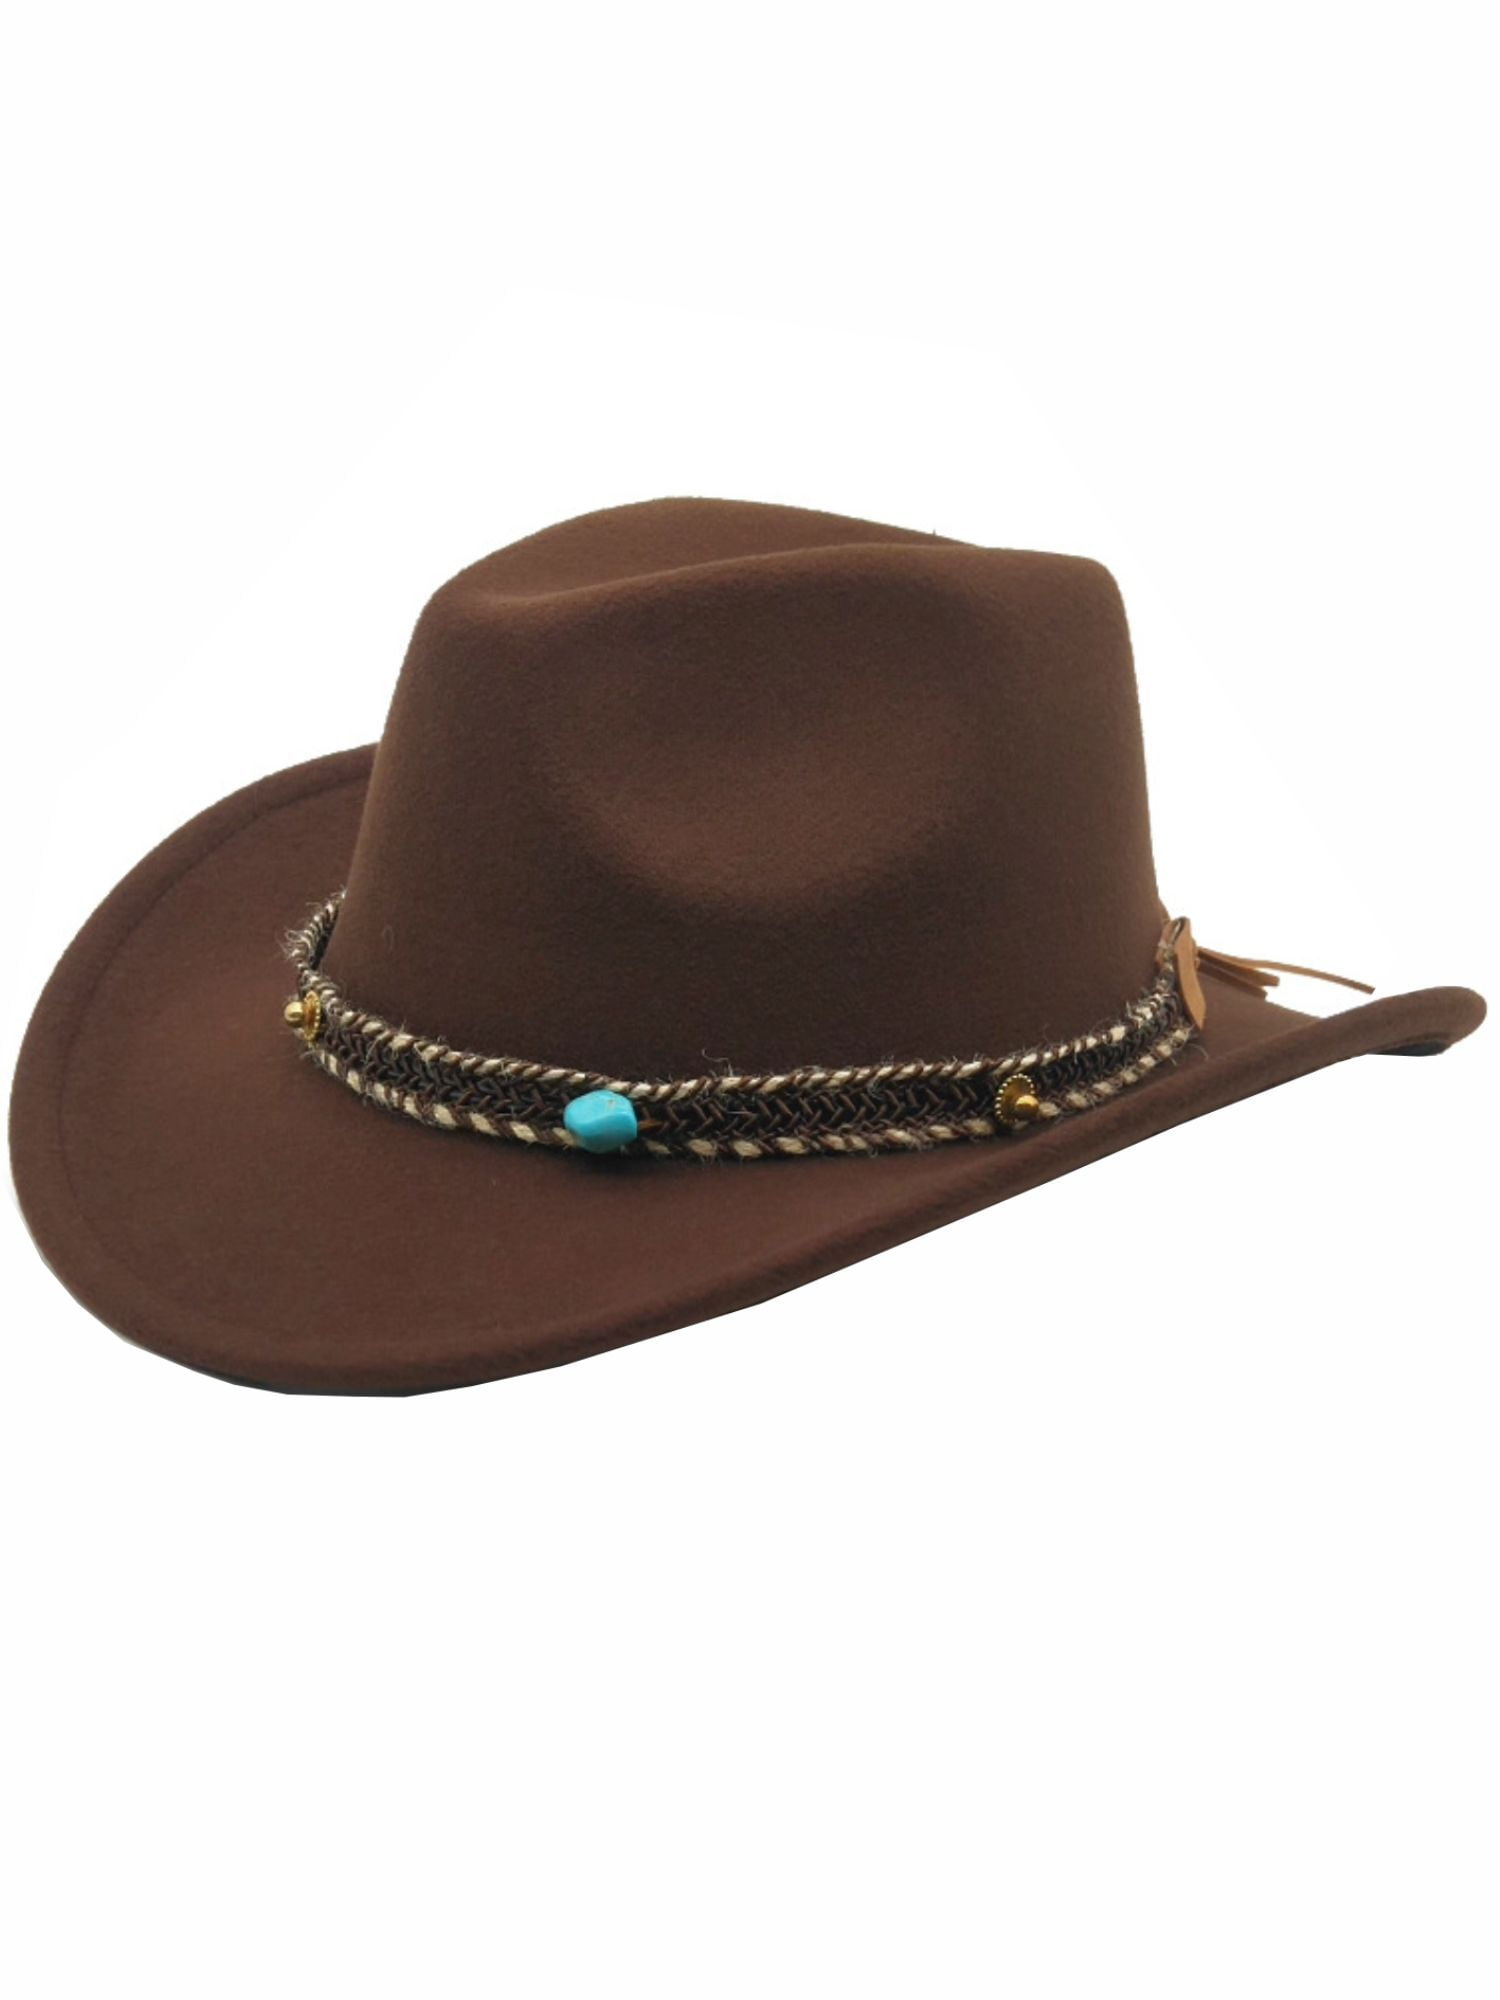 Ginsiom Western Cowboy Hat for Men Women Roll Up Felt Cowgirl Hat with ...